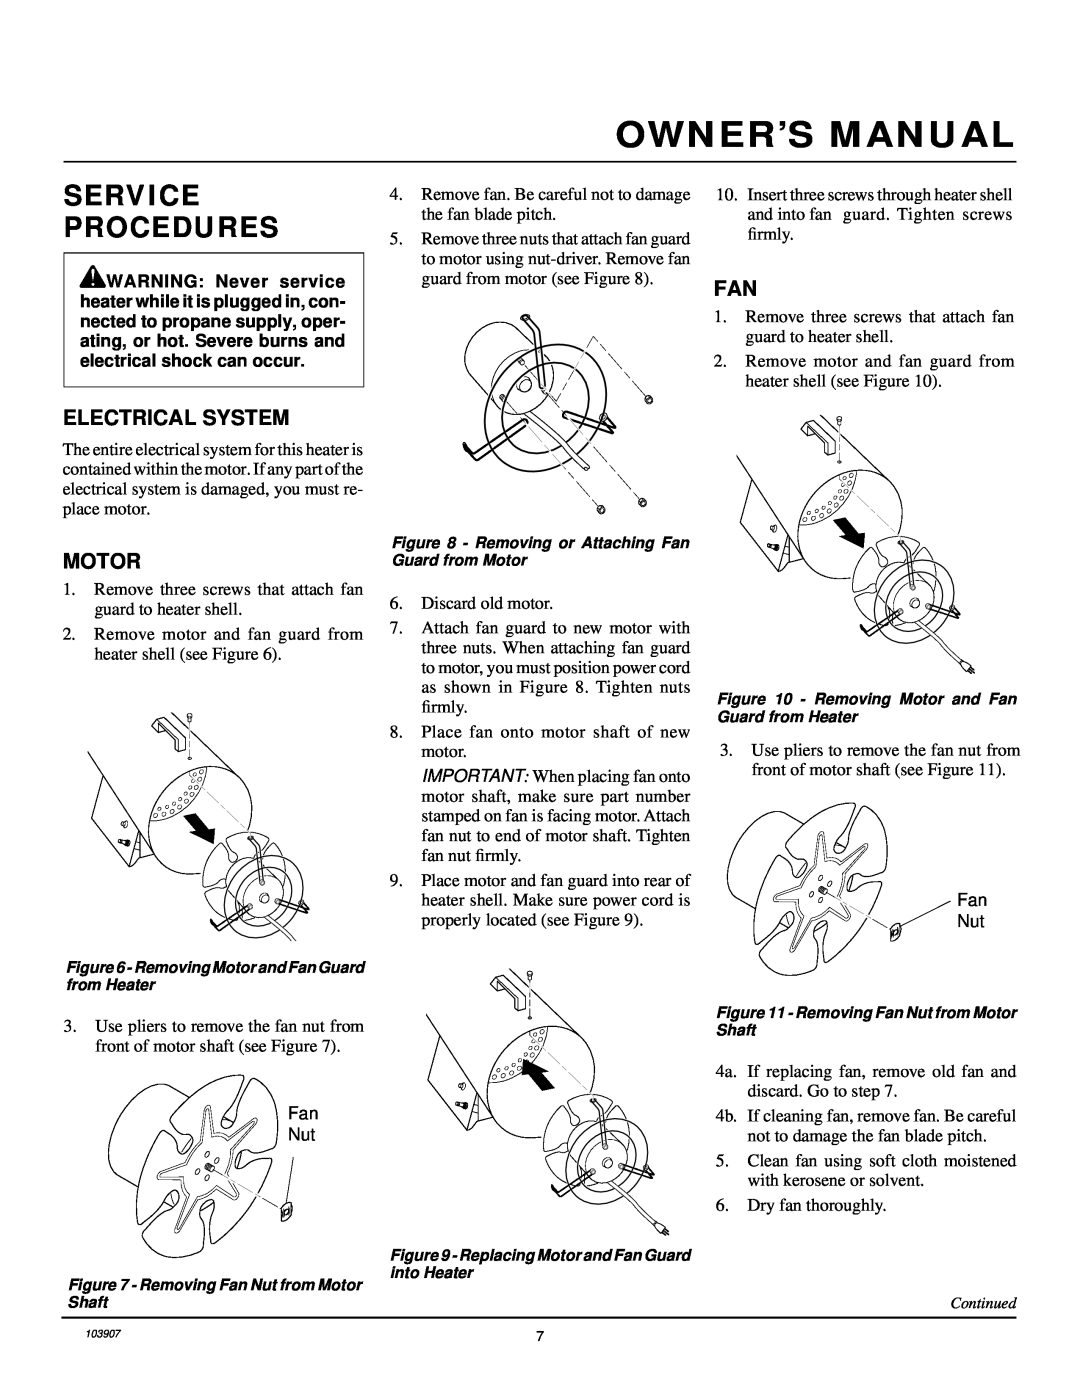 Desa RCLP35B owner manual Service Procedures, Electrical System, Motor 